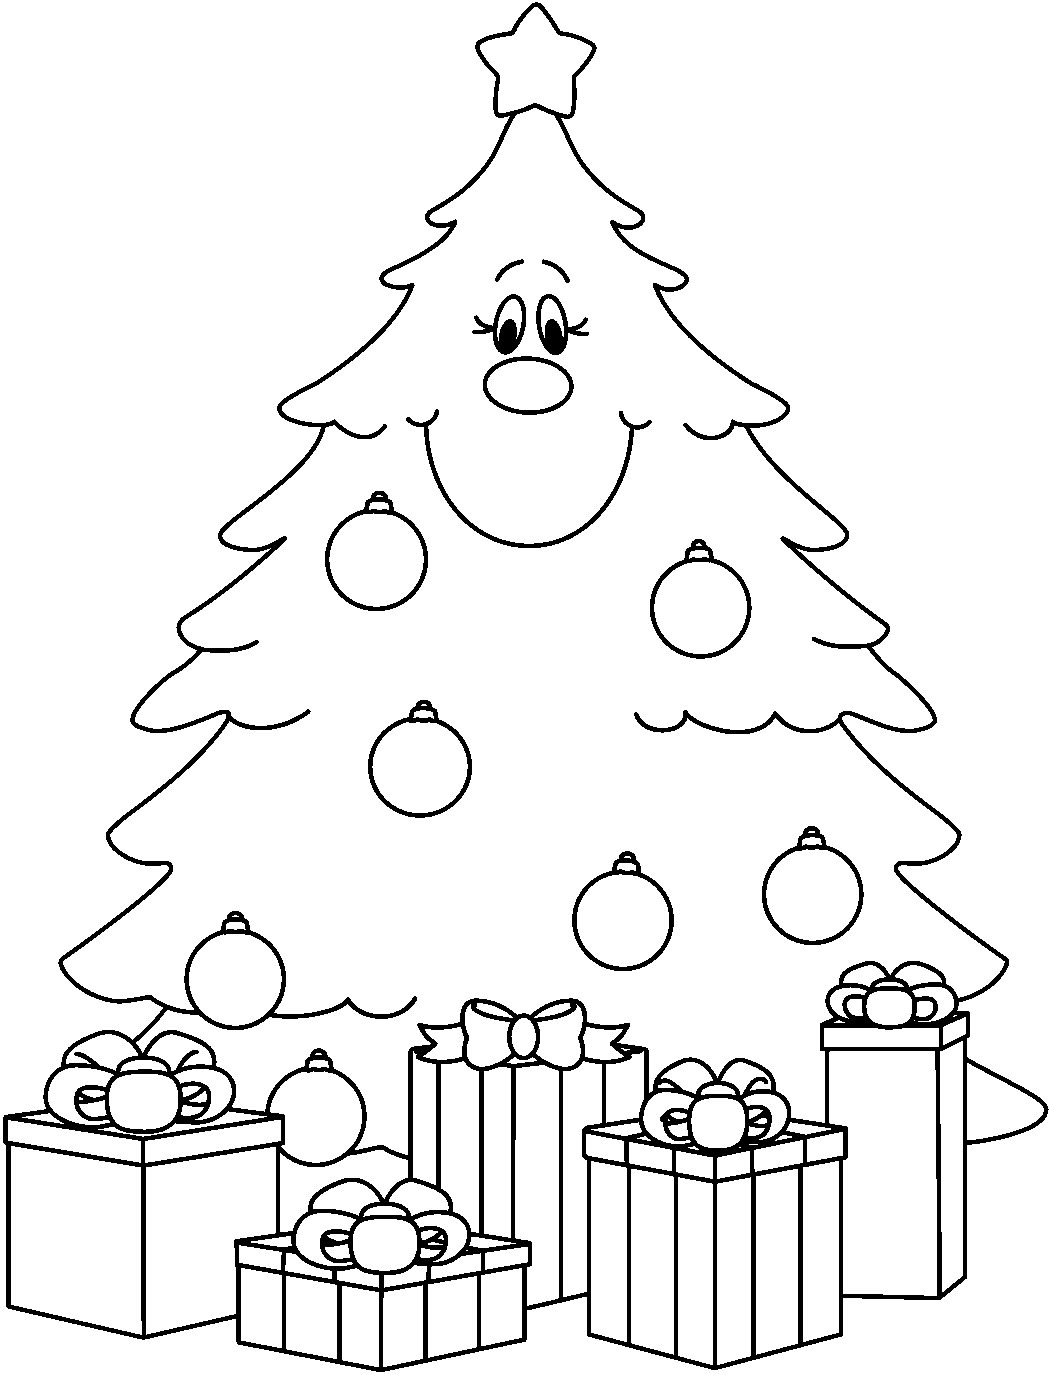 Árvore de Natal para imprimir e colorir